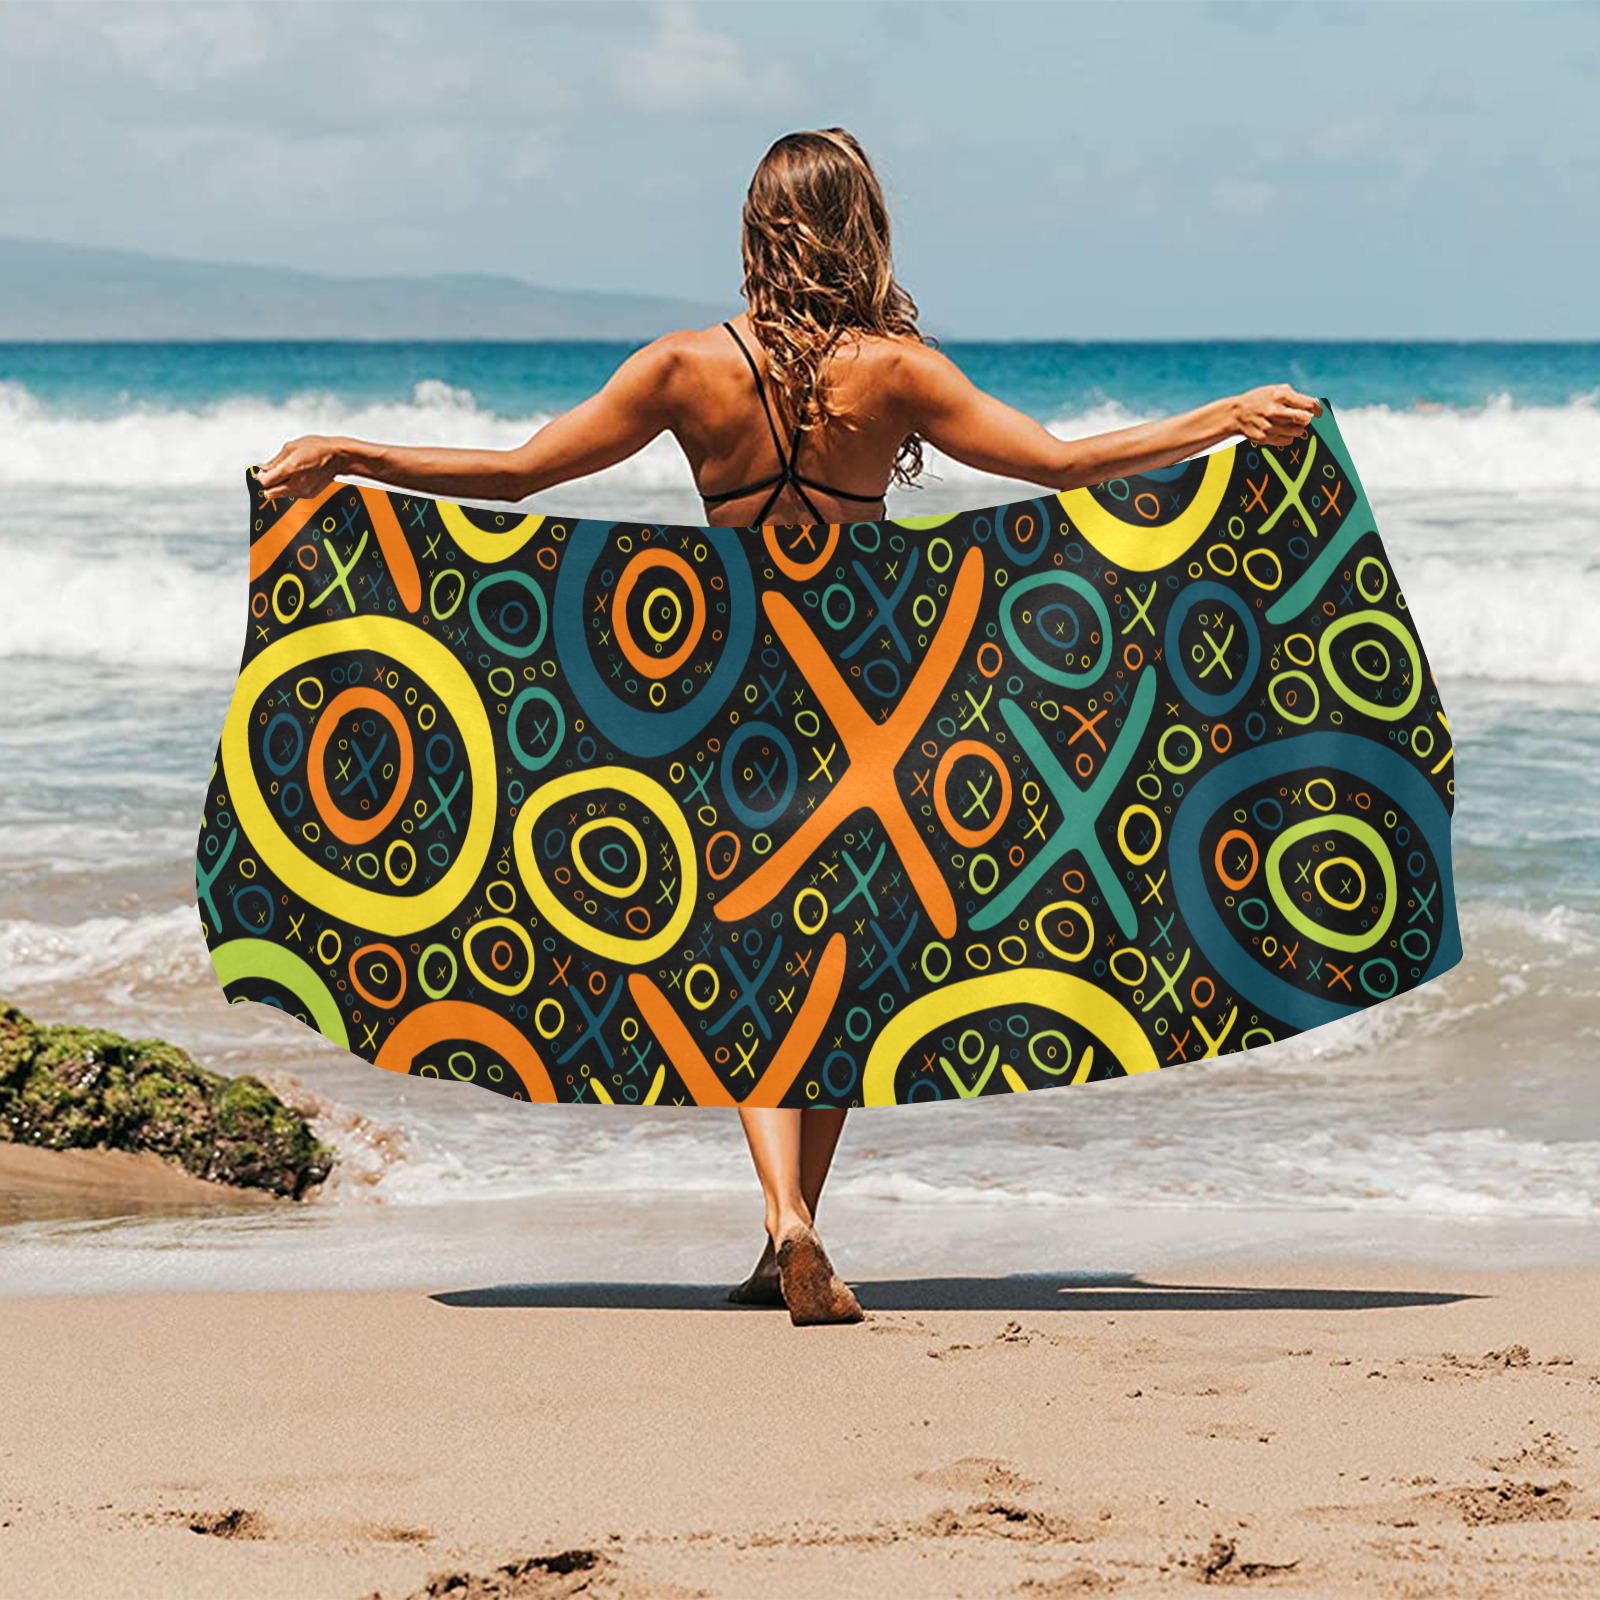 XO0L2-O SYMPLZ Beach Towel Beach Towel 32"x 71"